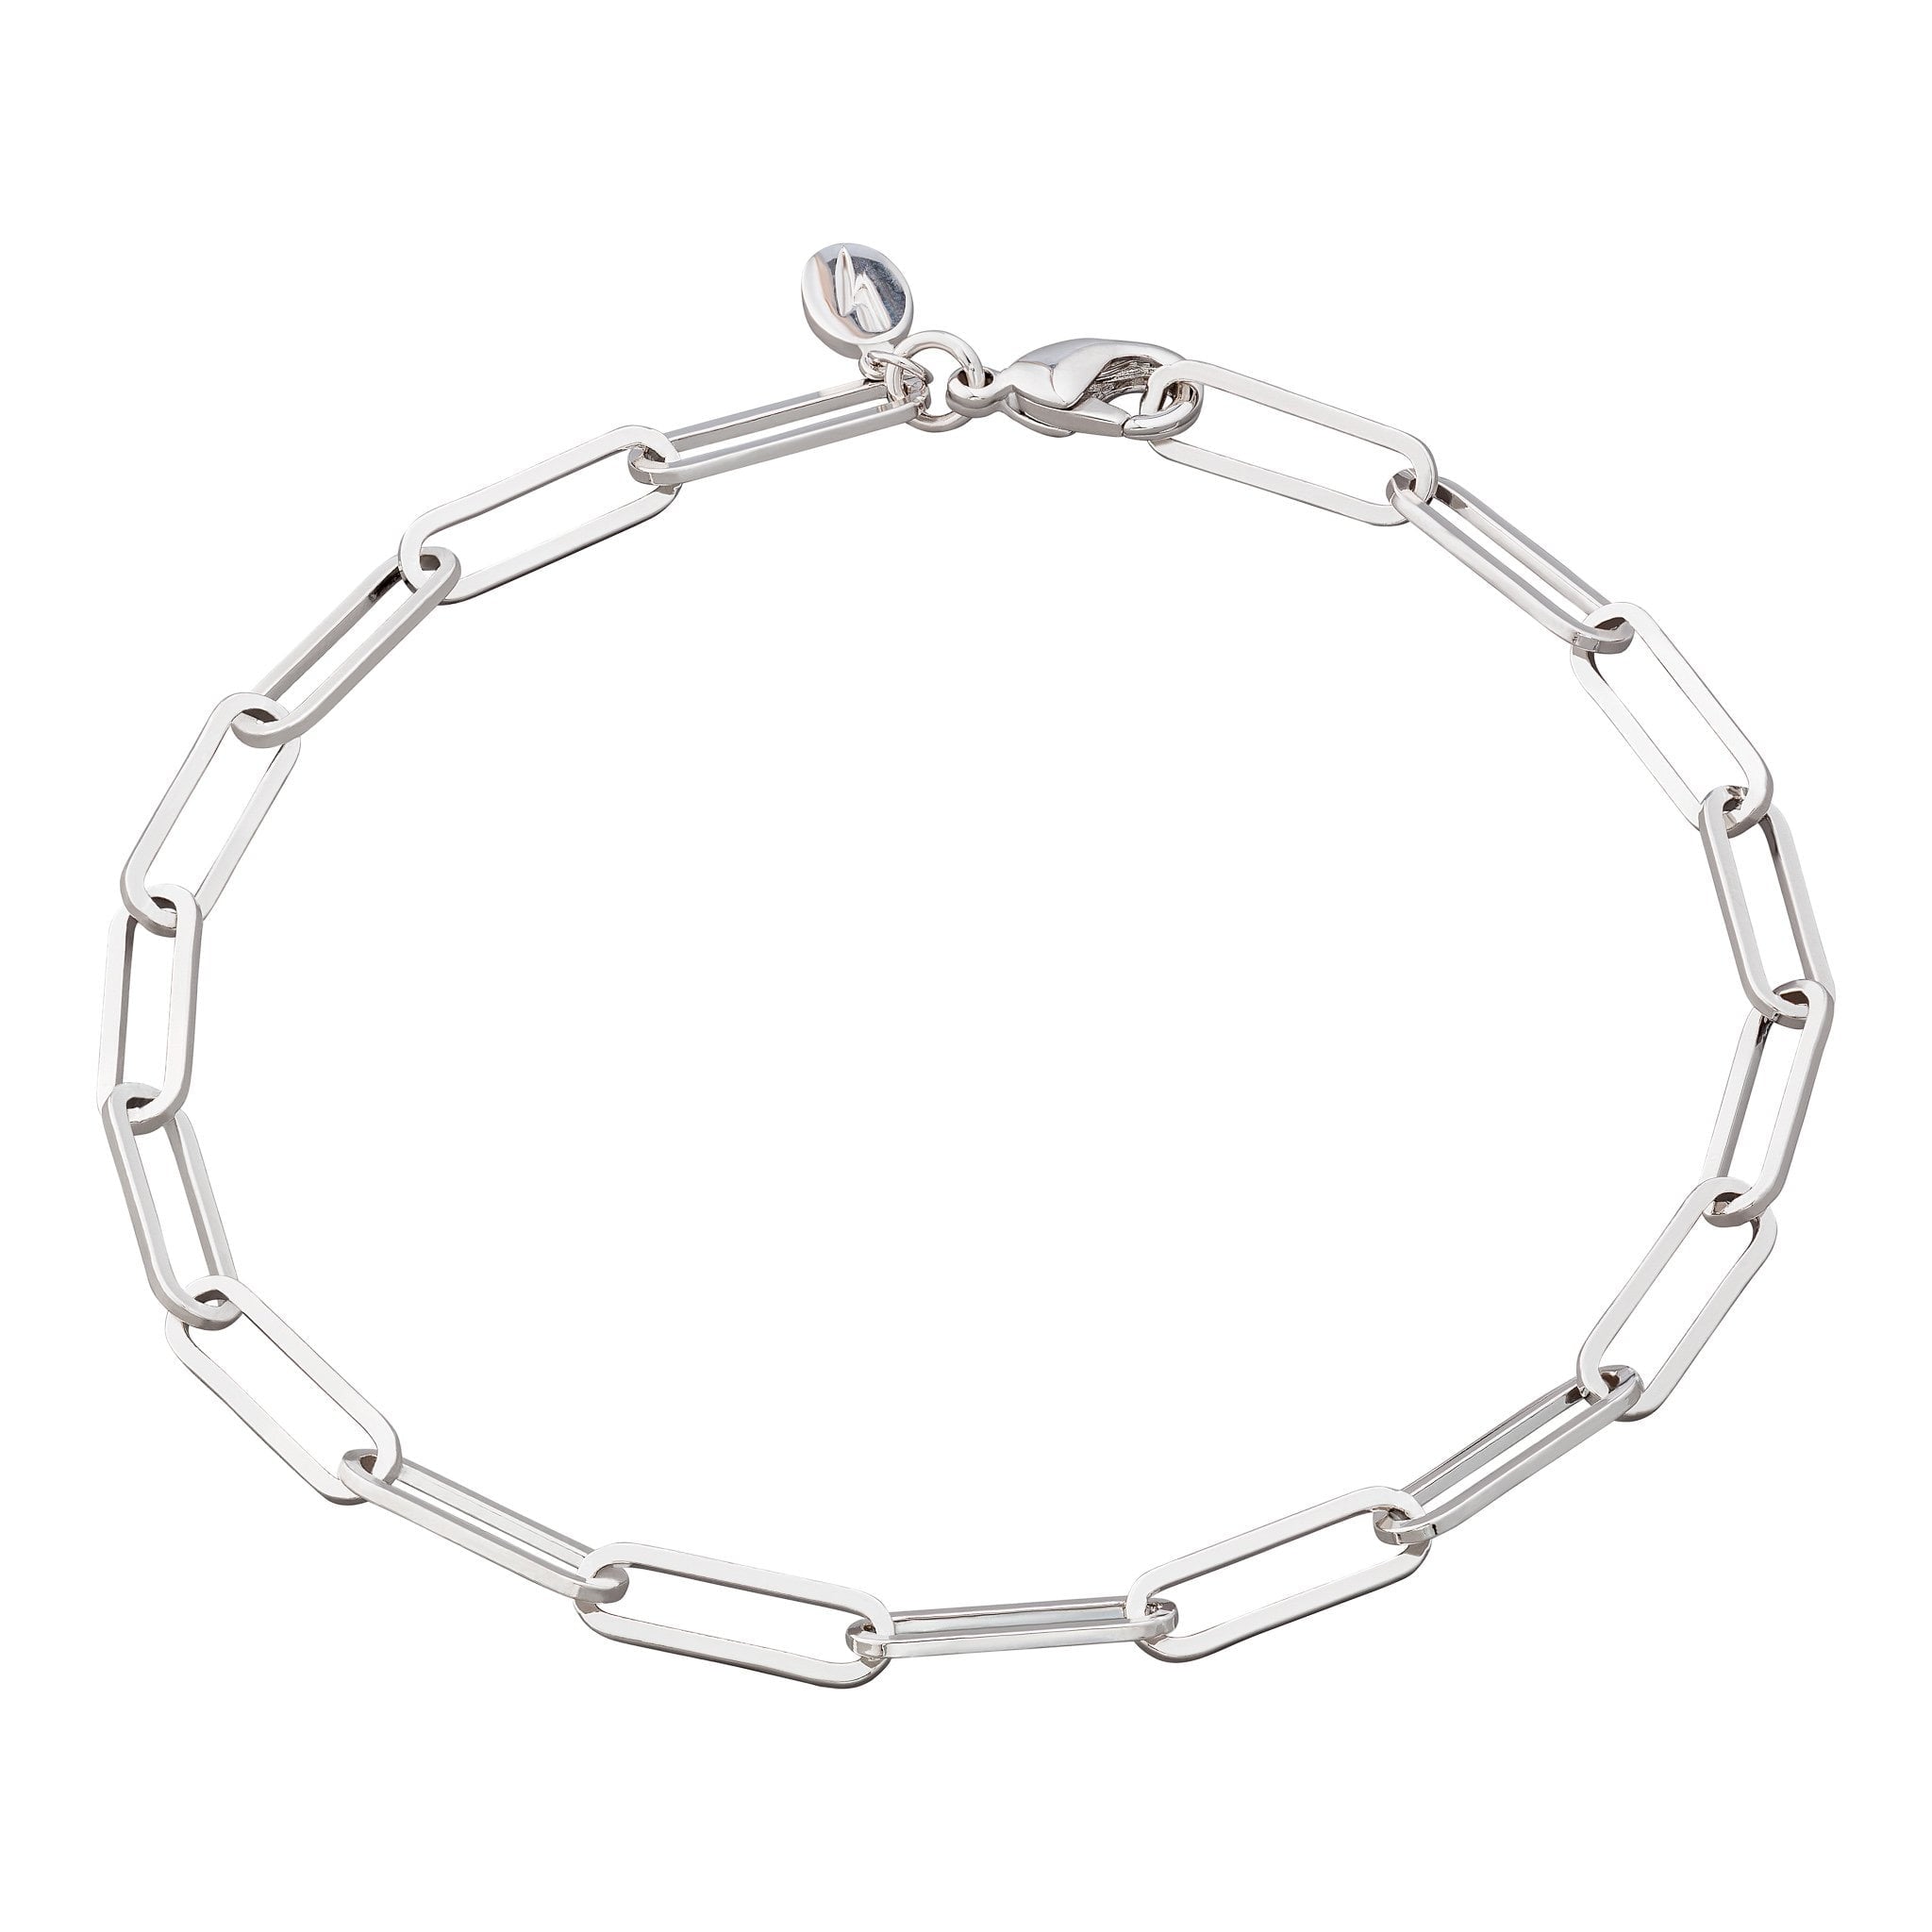 Long Link Chain Bracelet